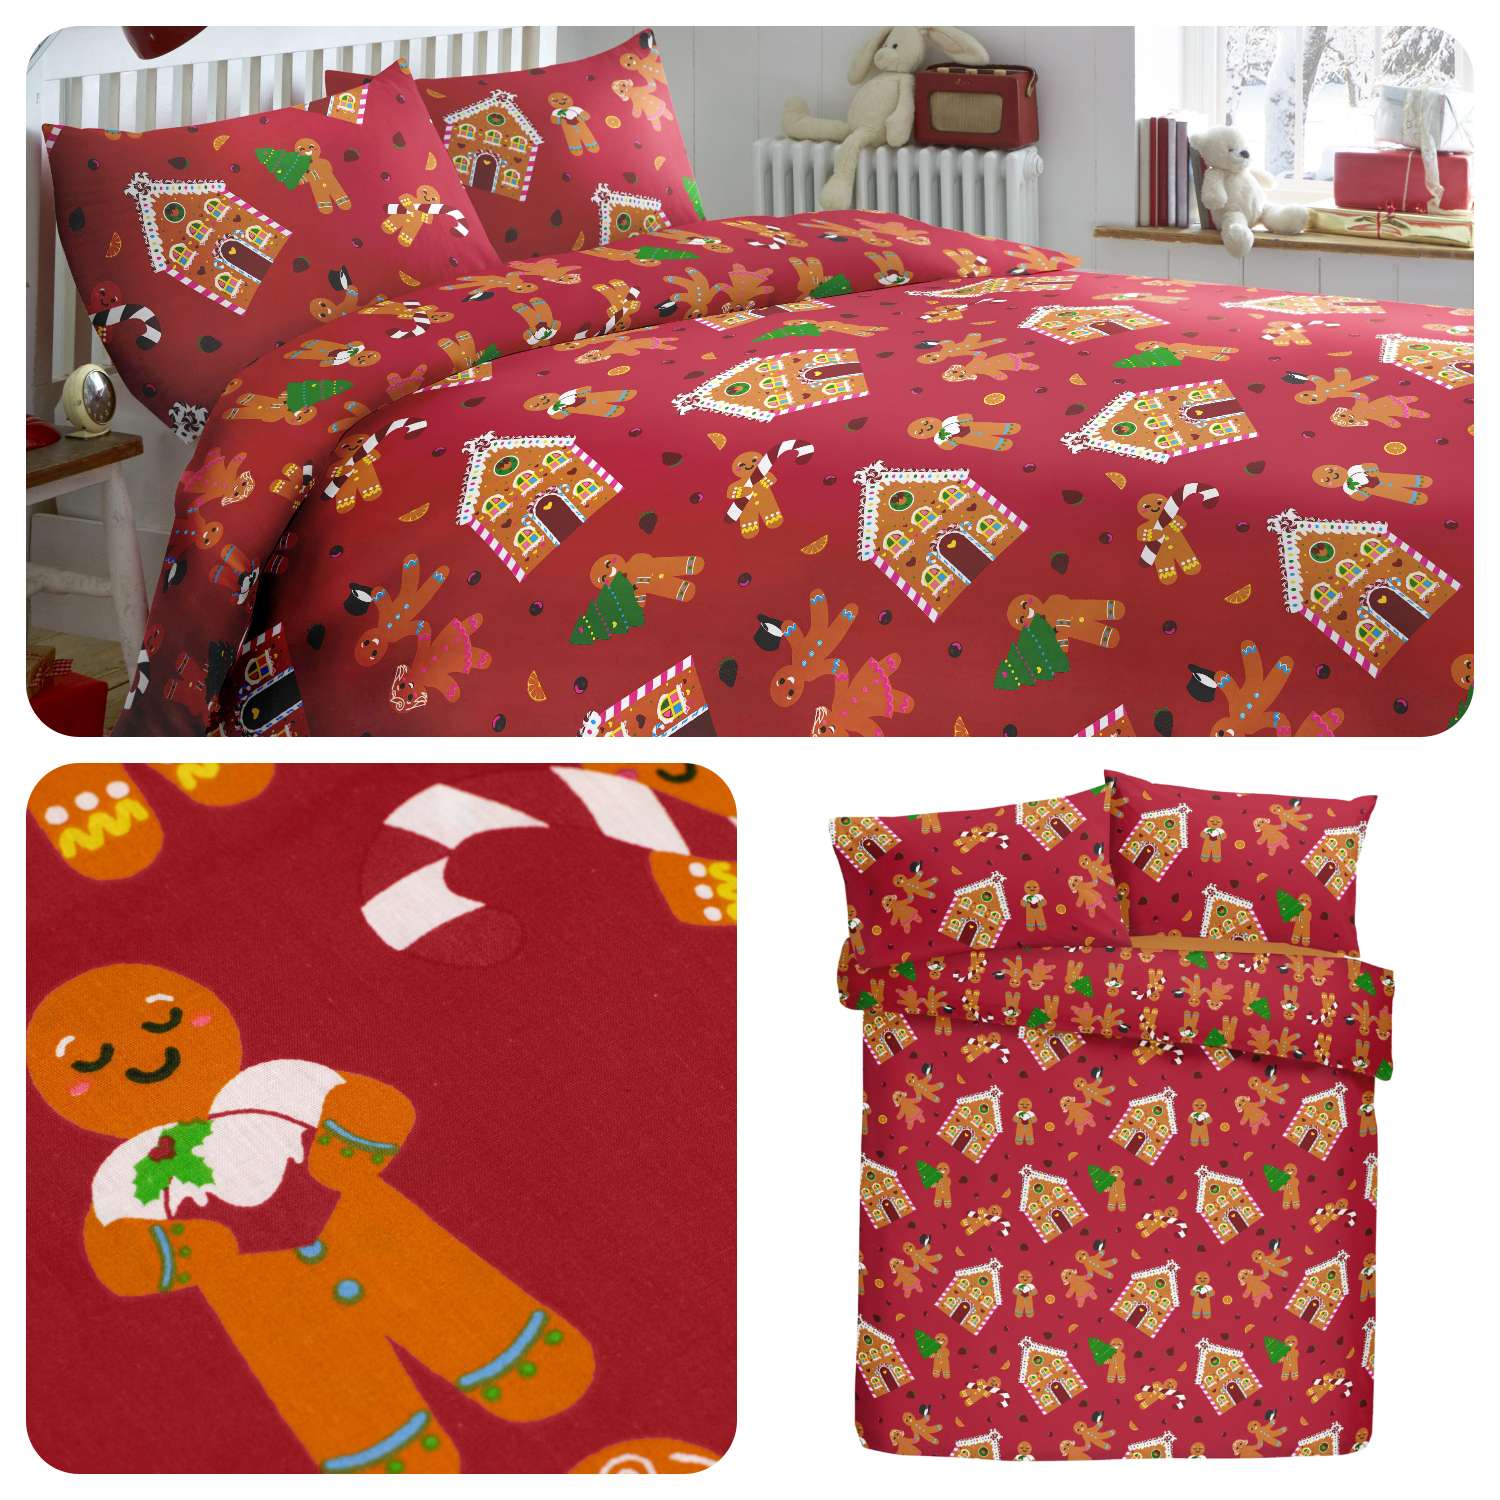 Bedlam Gingerbread Man Red Xmas Festive Duvet Cover Set Ebay